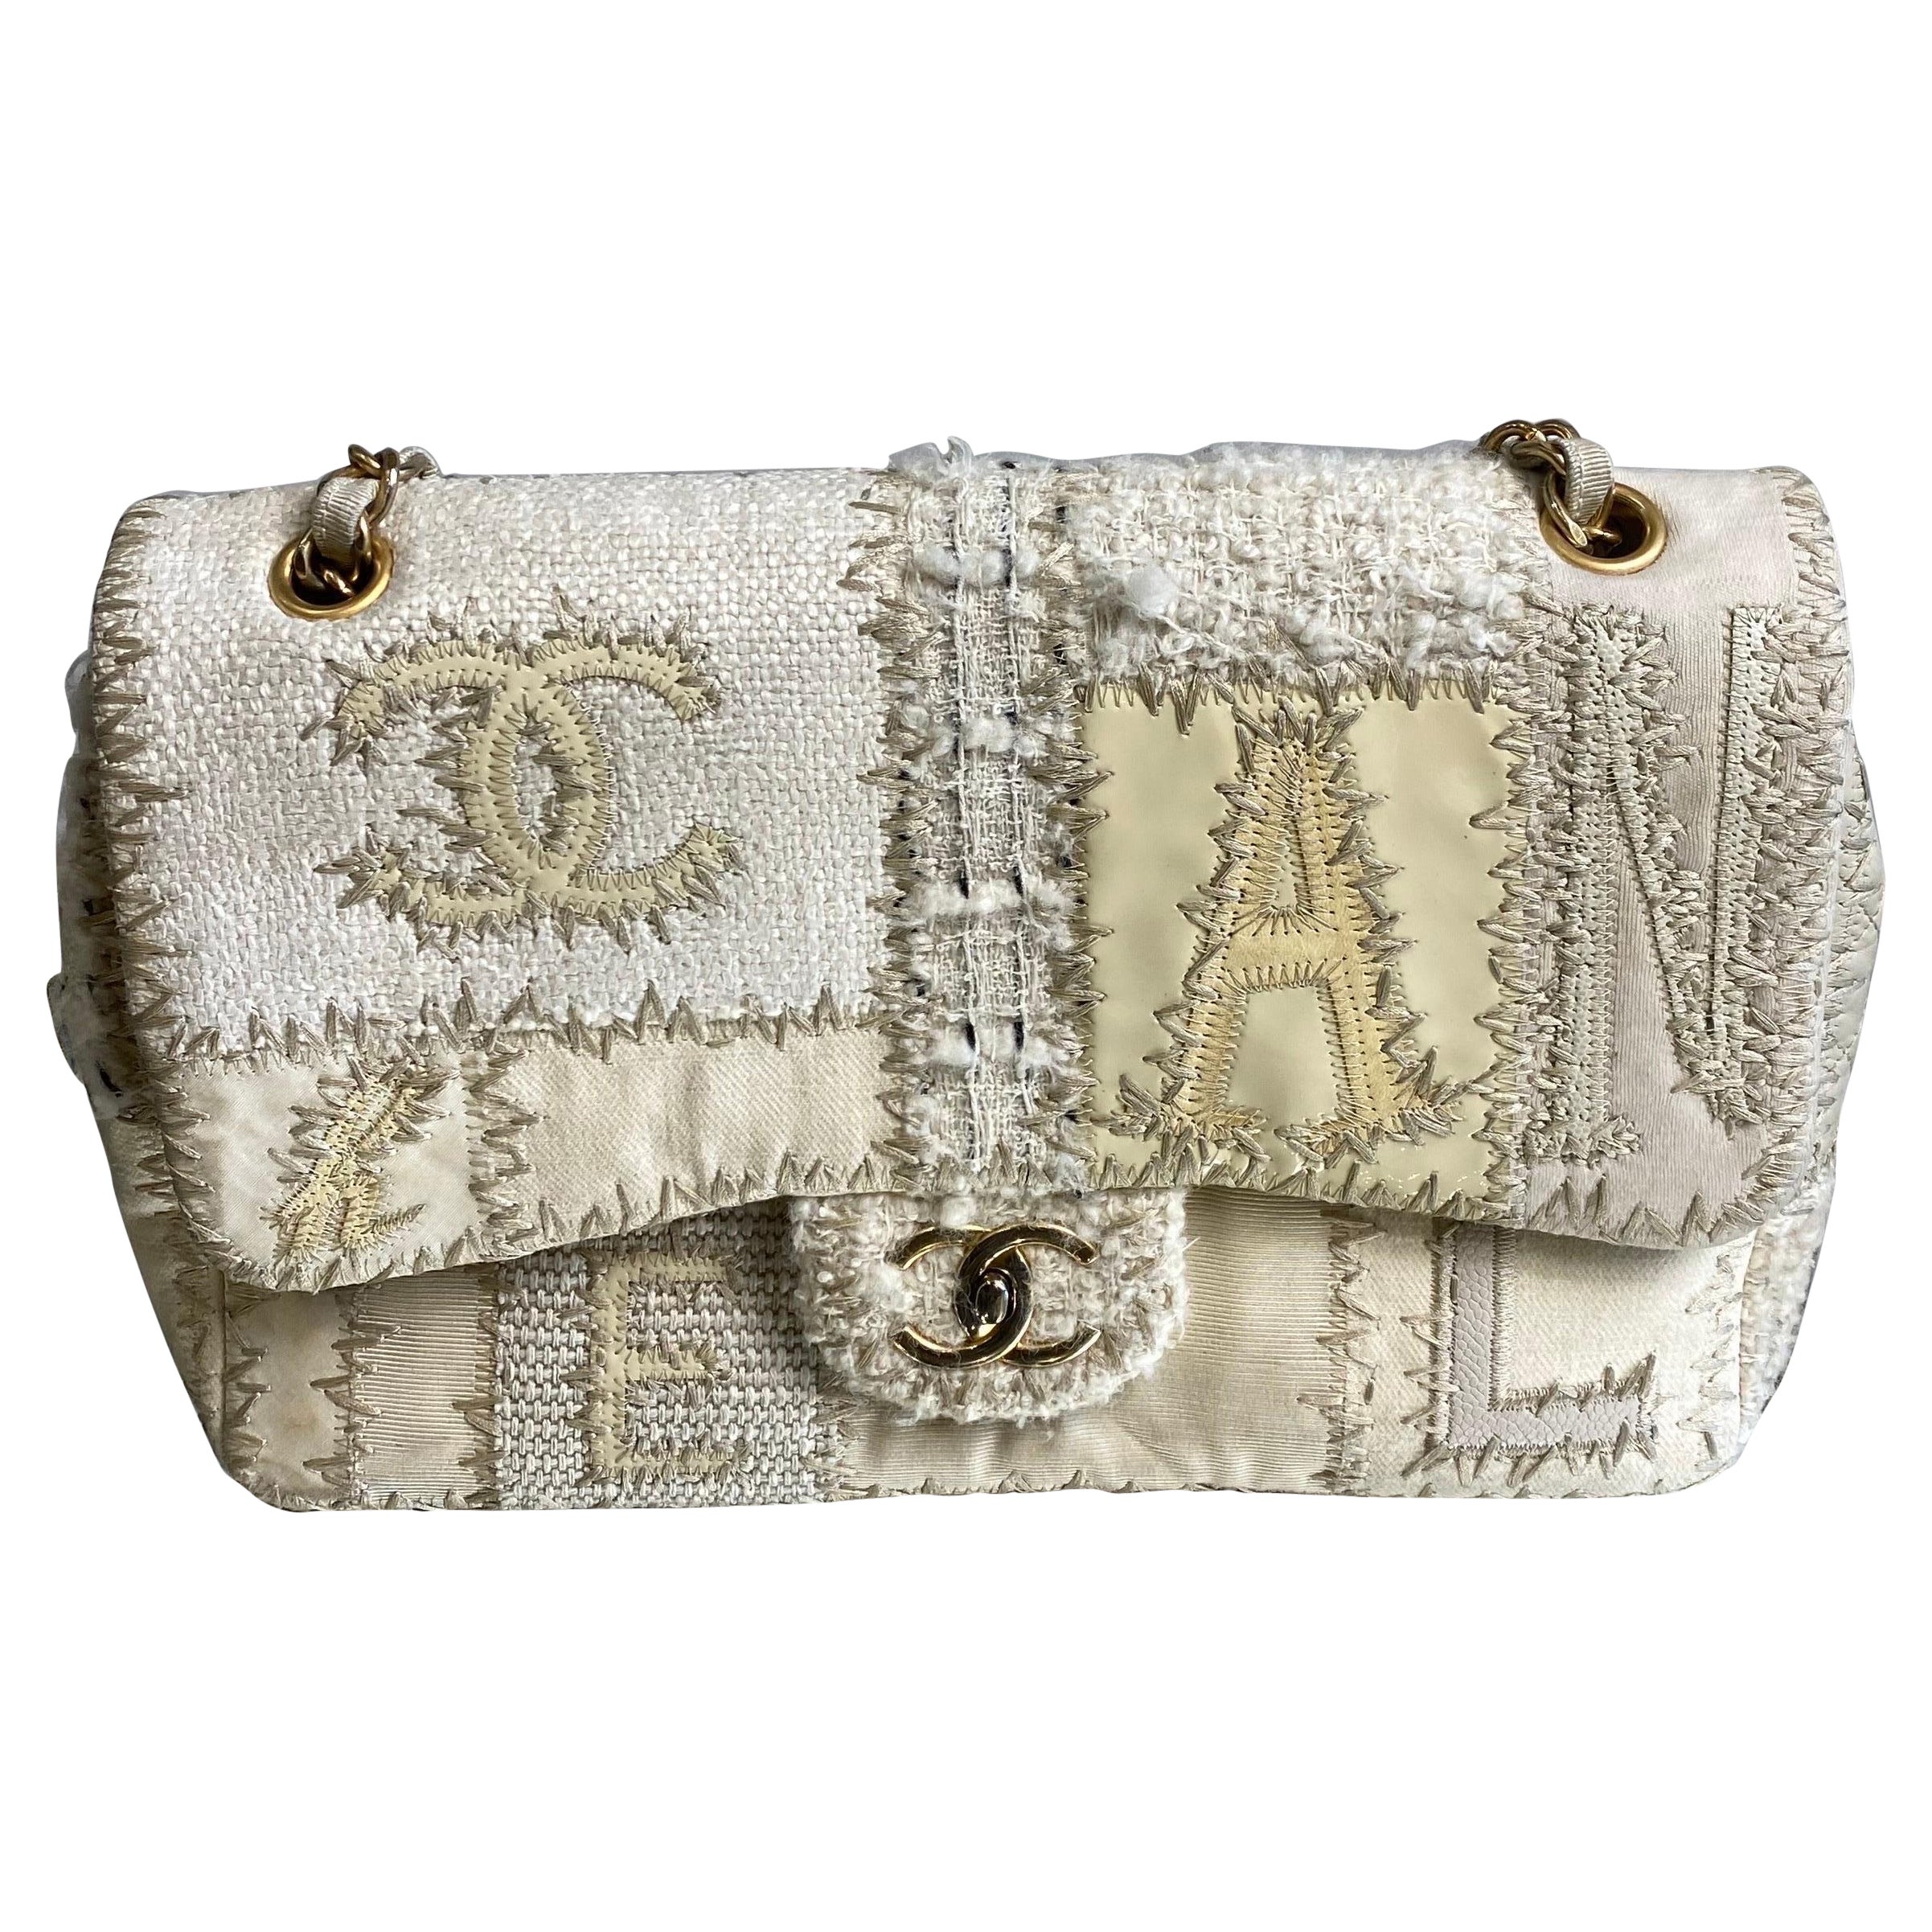 Chanel Jumbo Limited Edition Patchwork Bag en vente